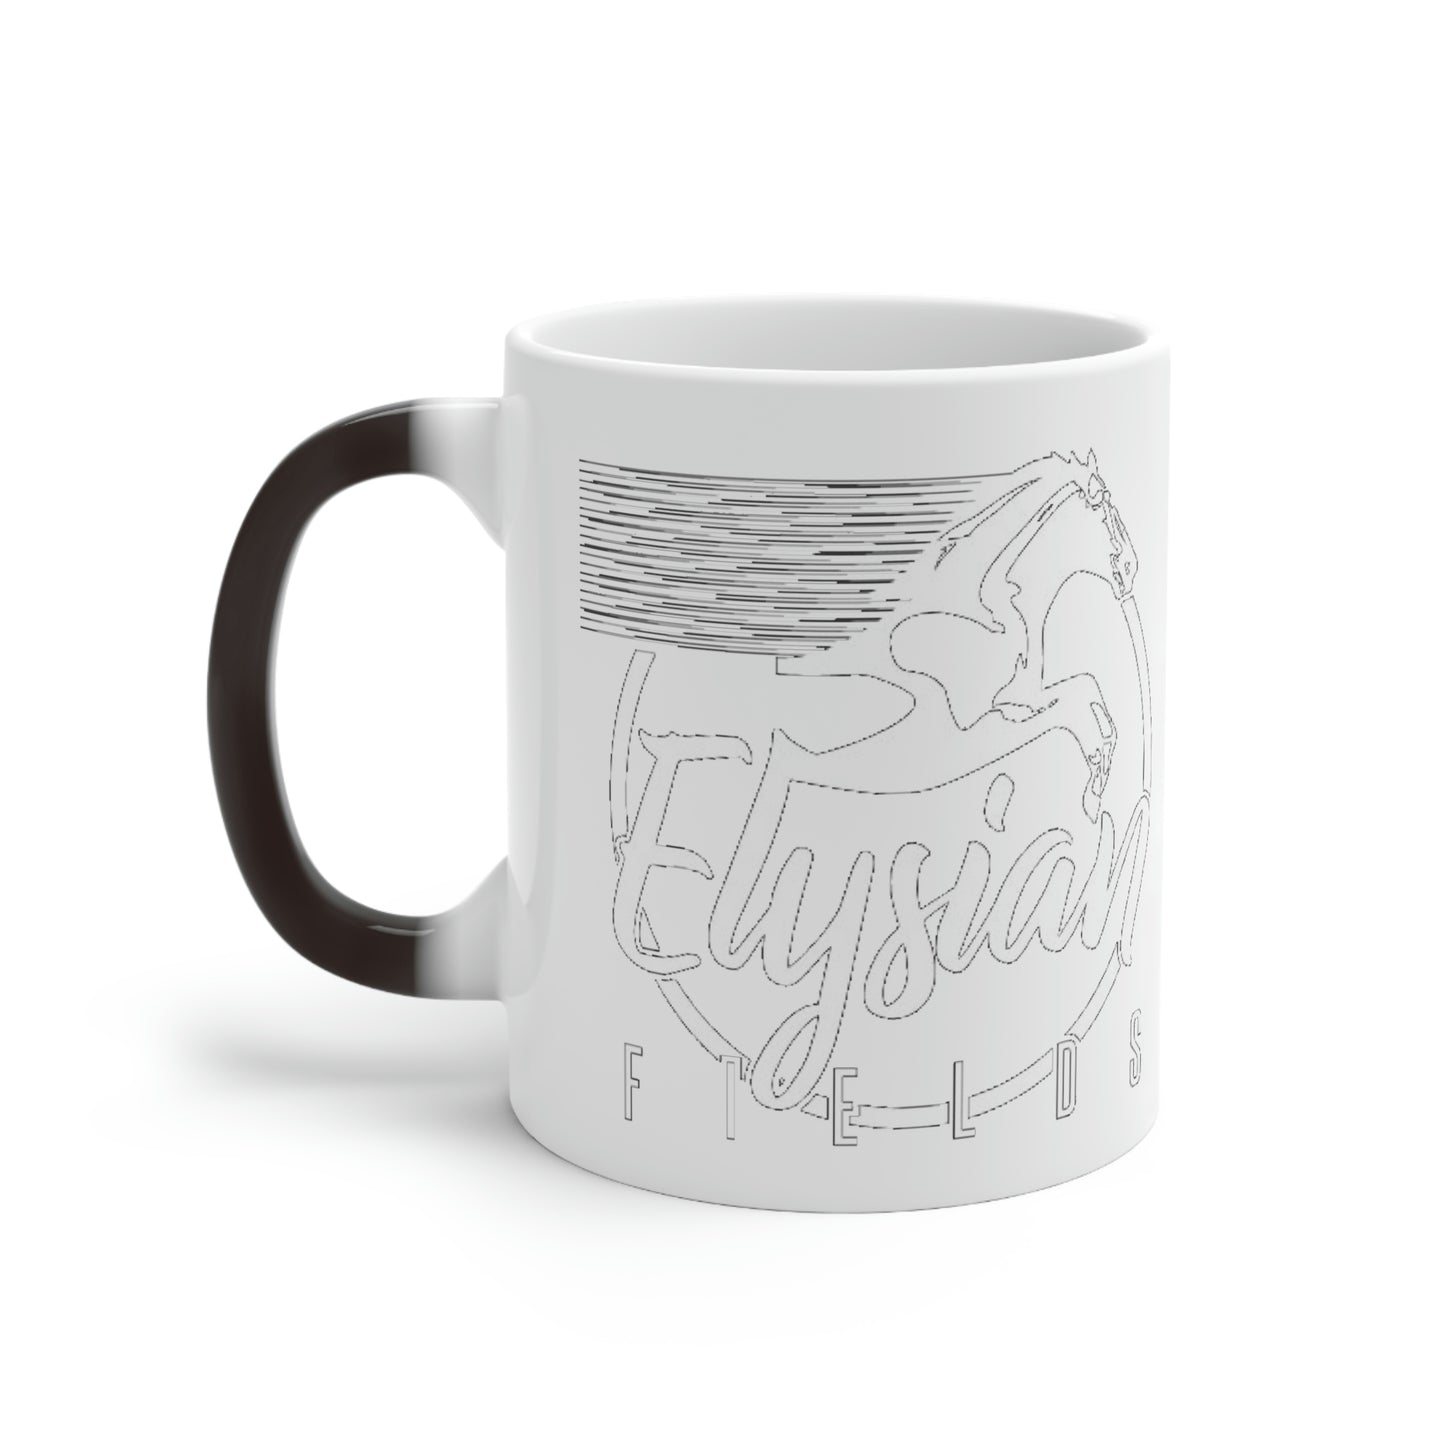 Elysian Fields - Color Changing Mug